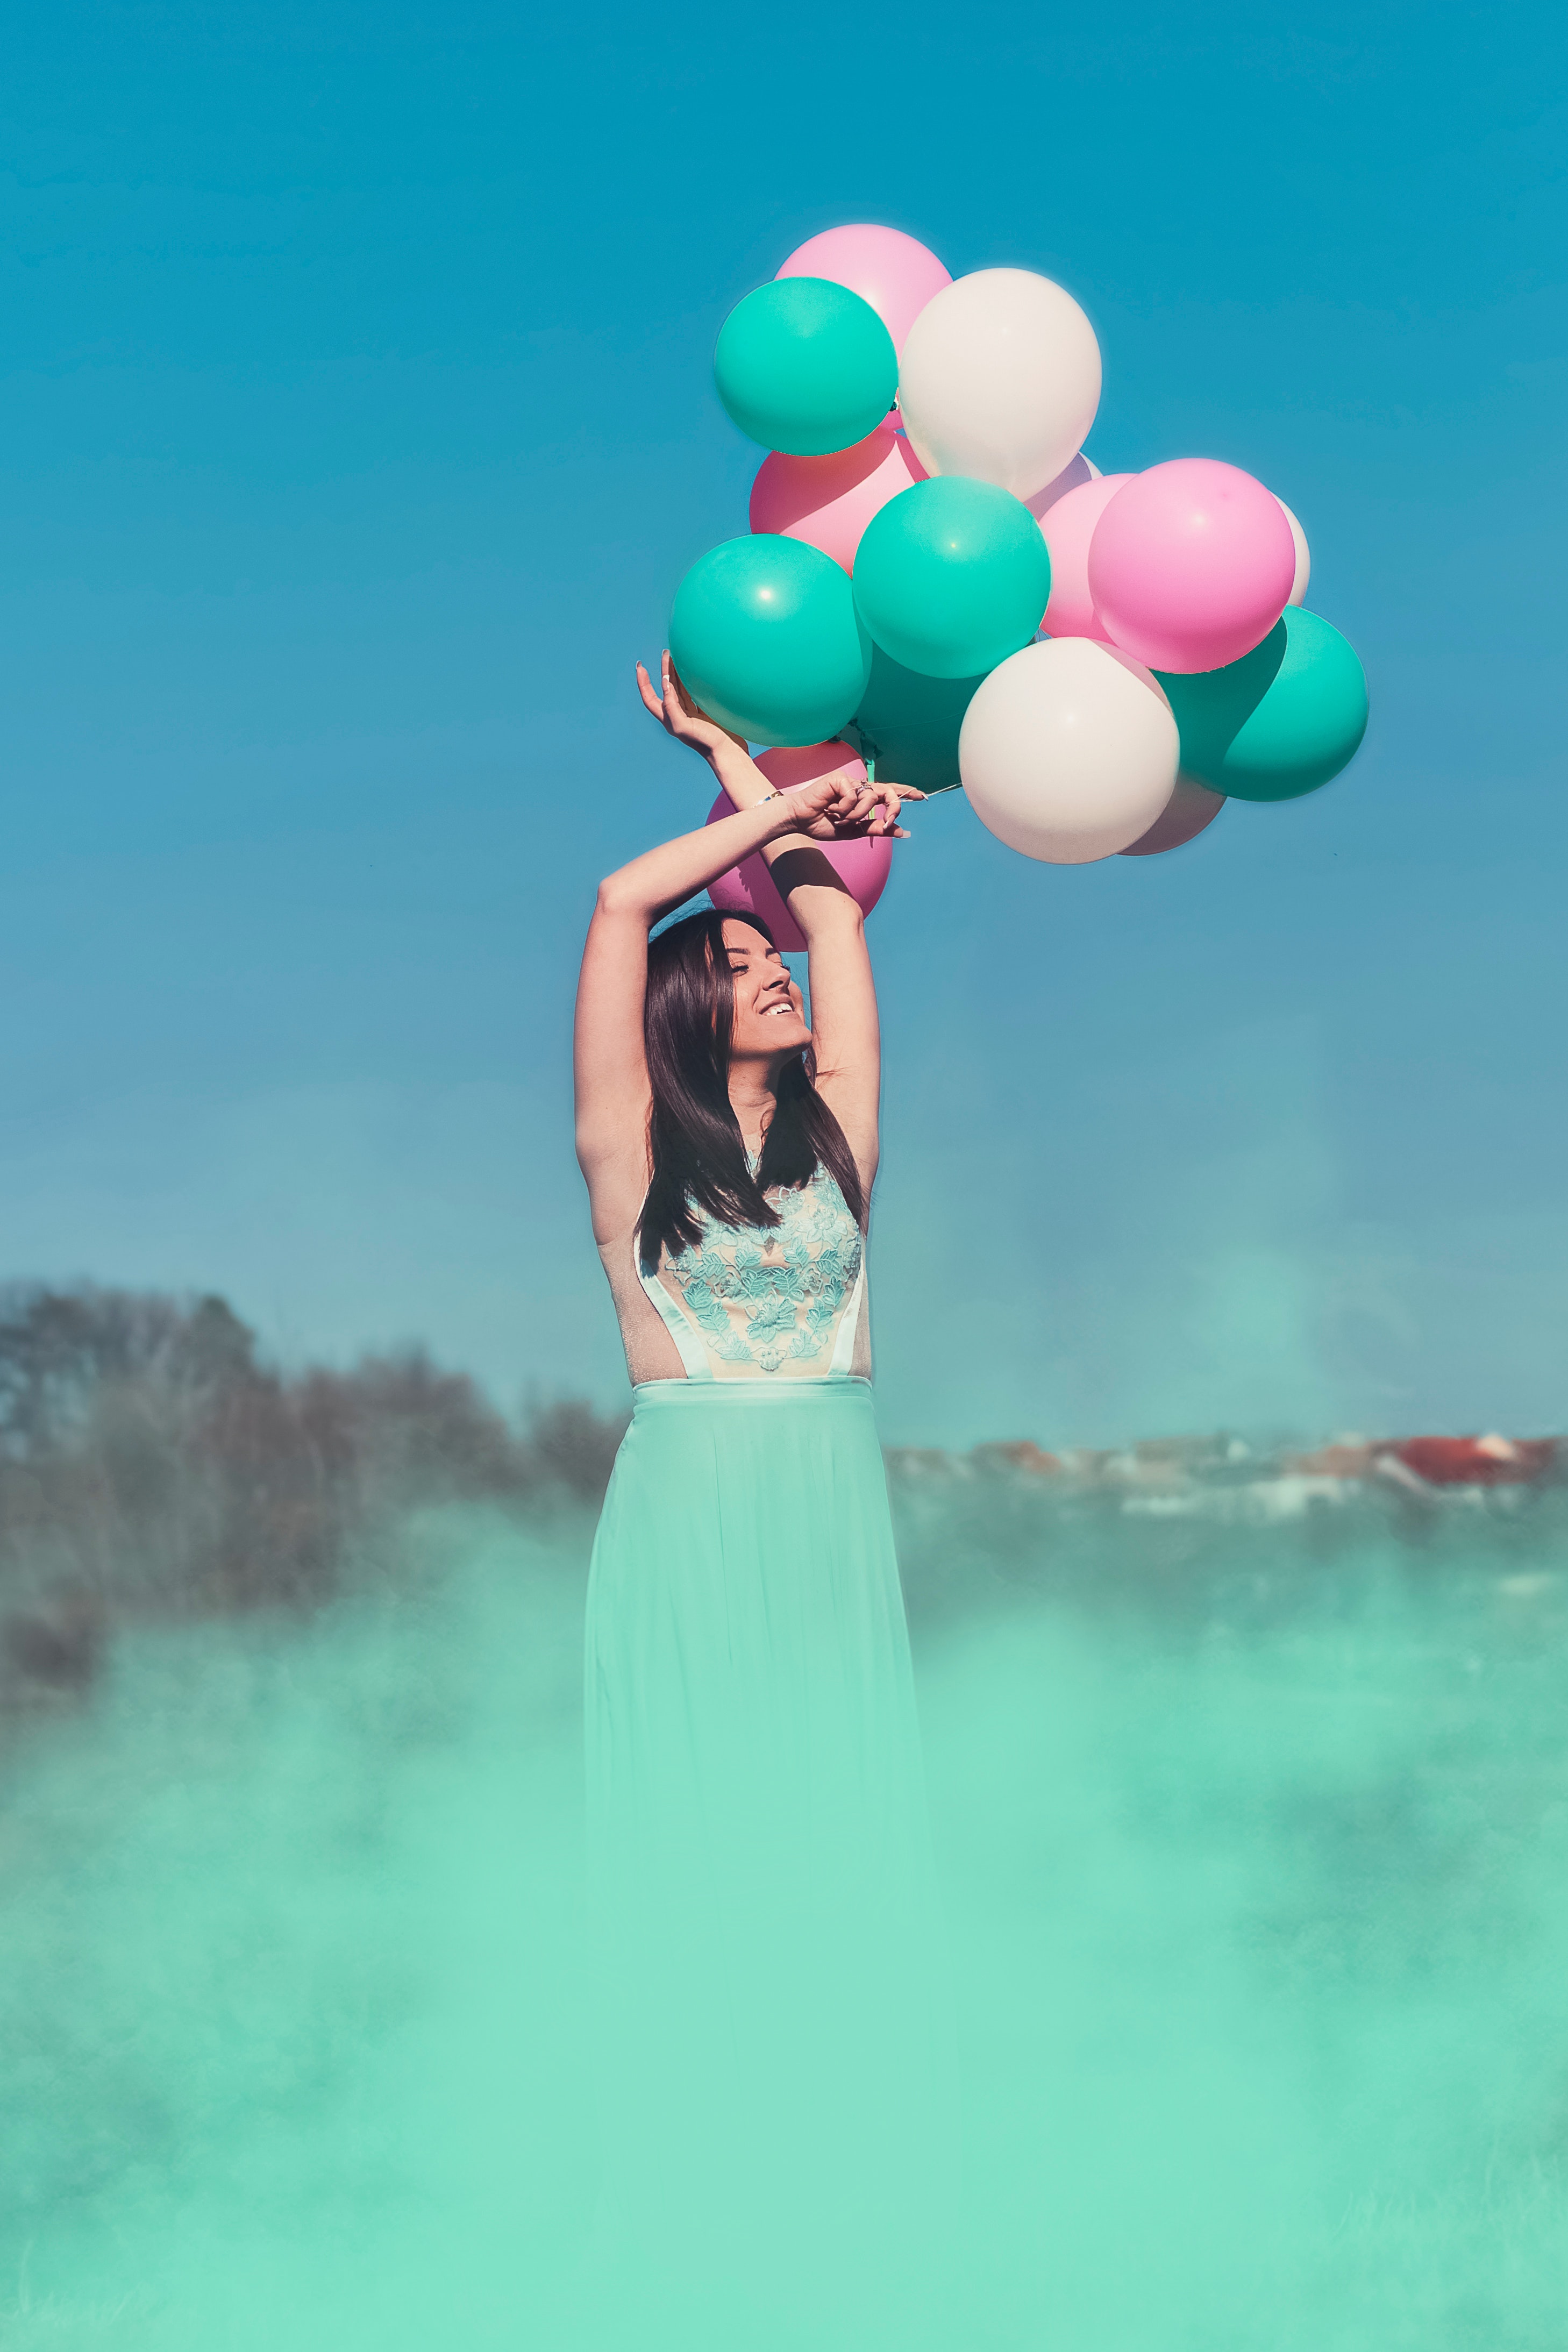 Woman wearing green dress holding balloons photo